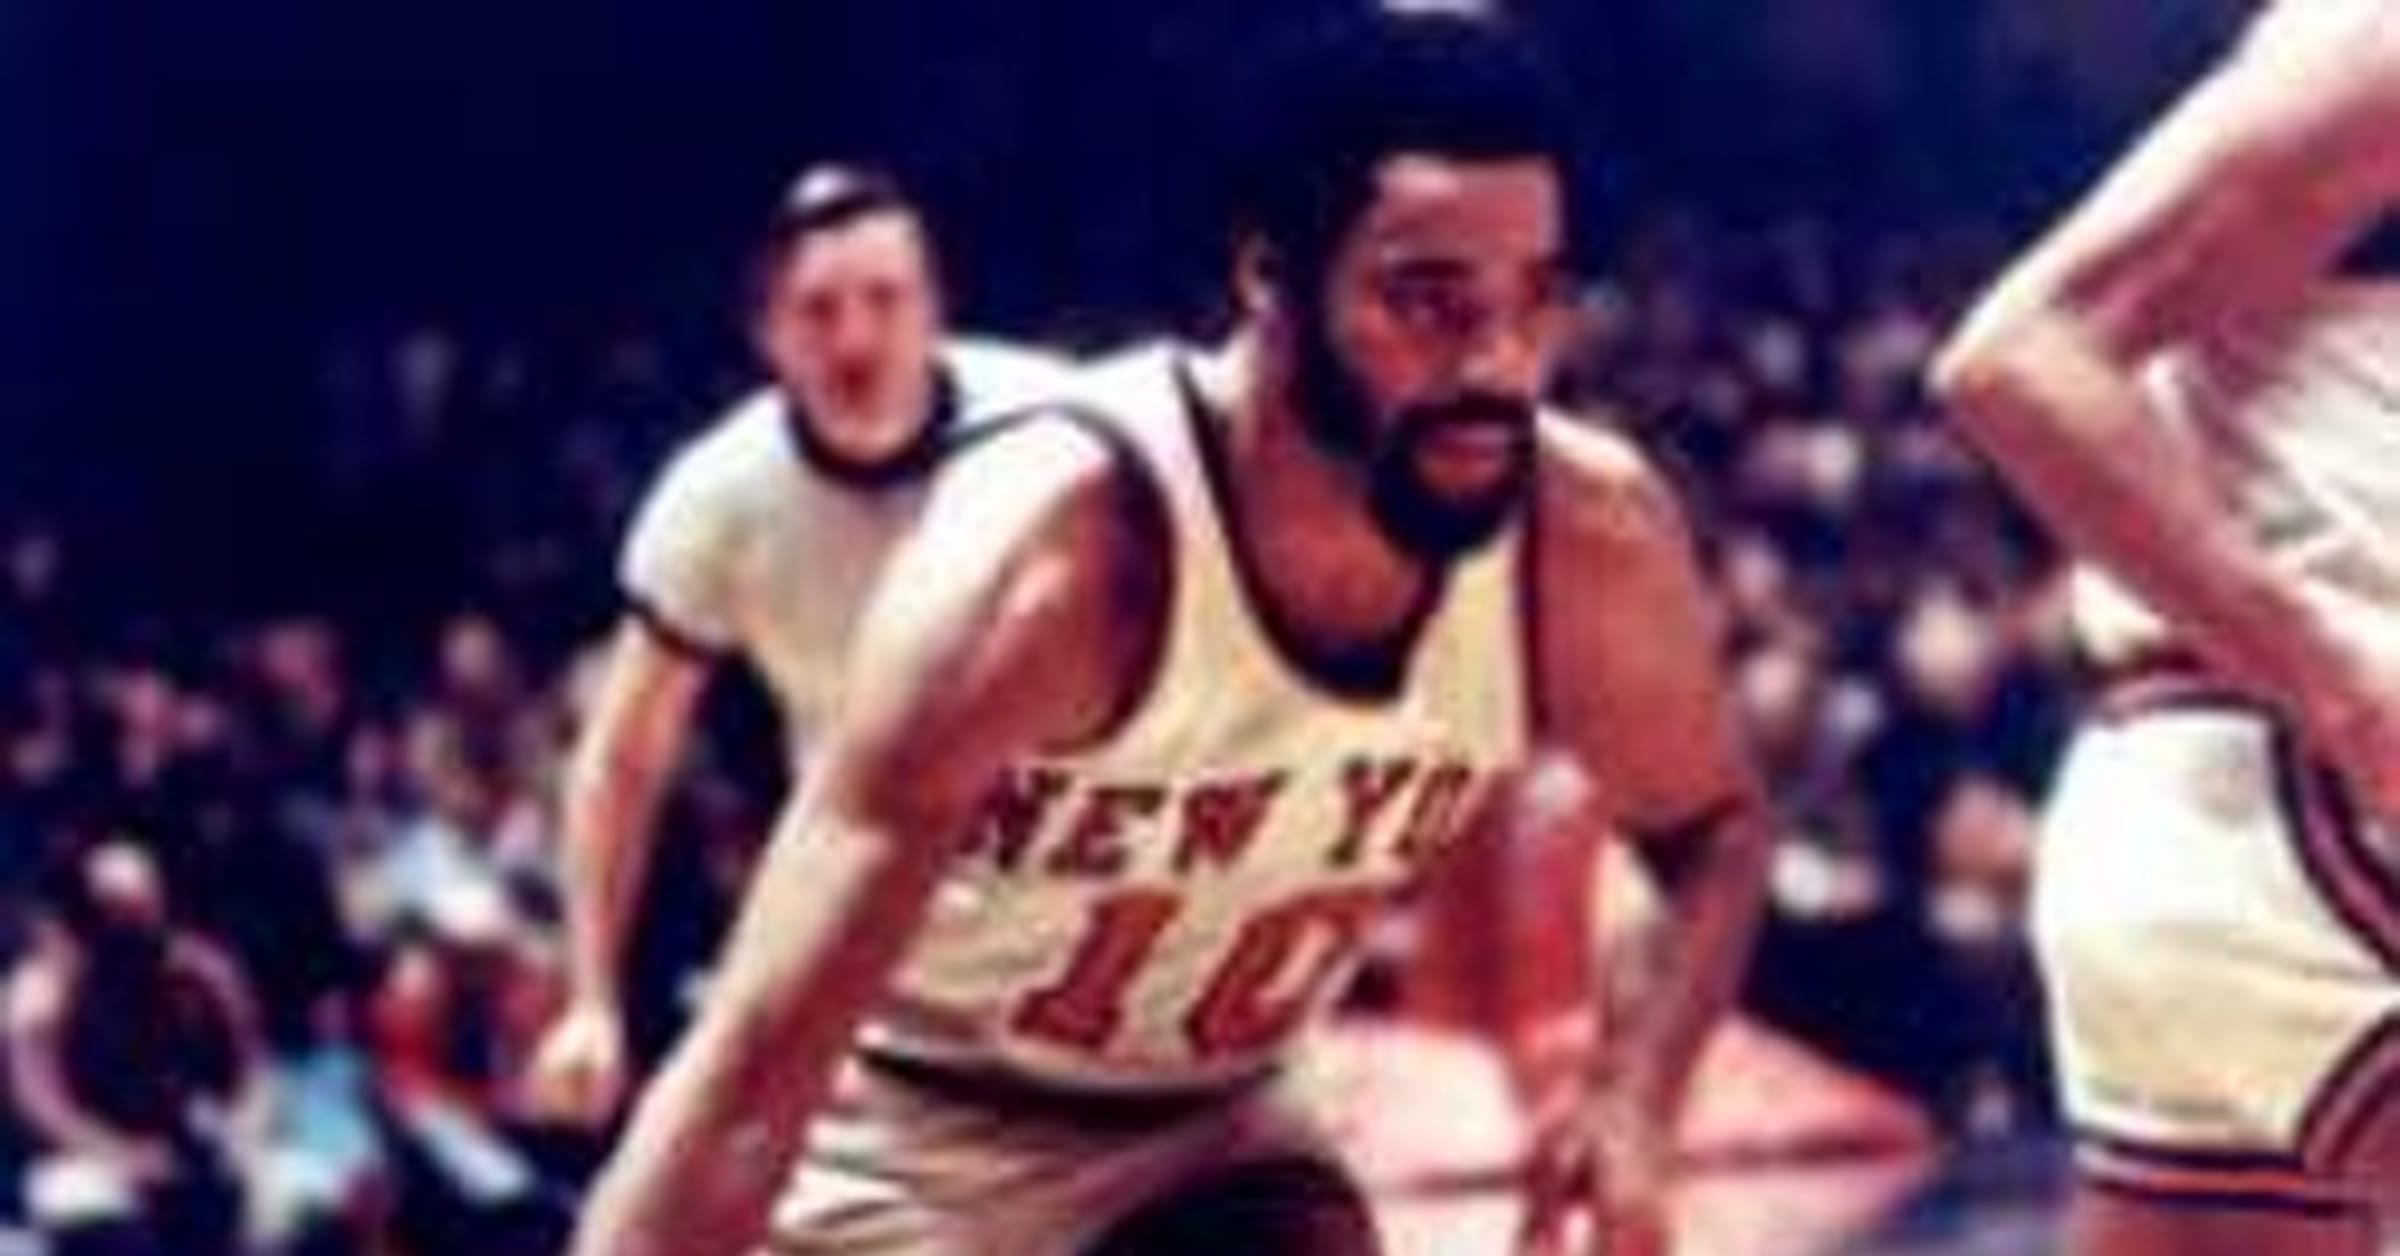 Garden History: Latrell Sprewell's tenure with the New York Knicks